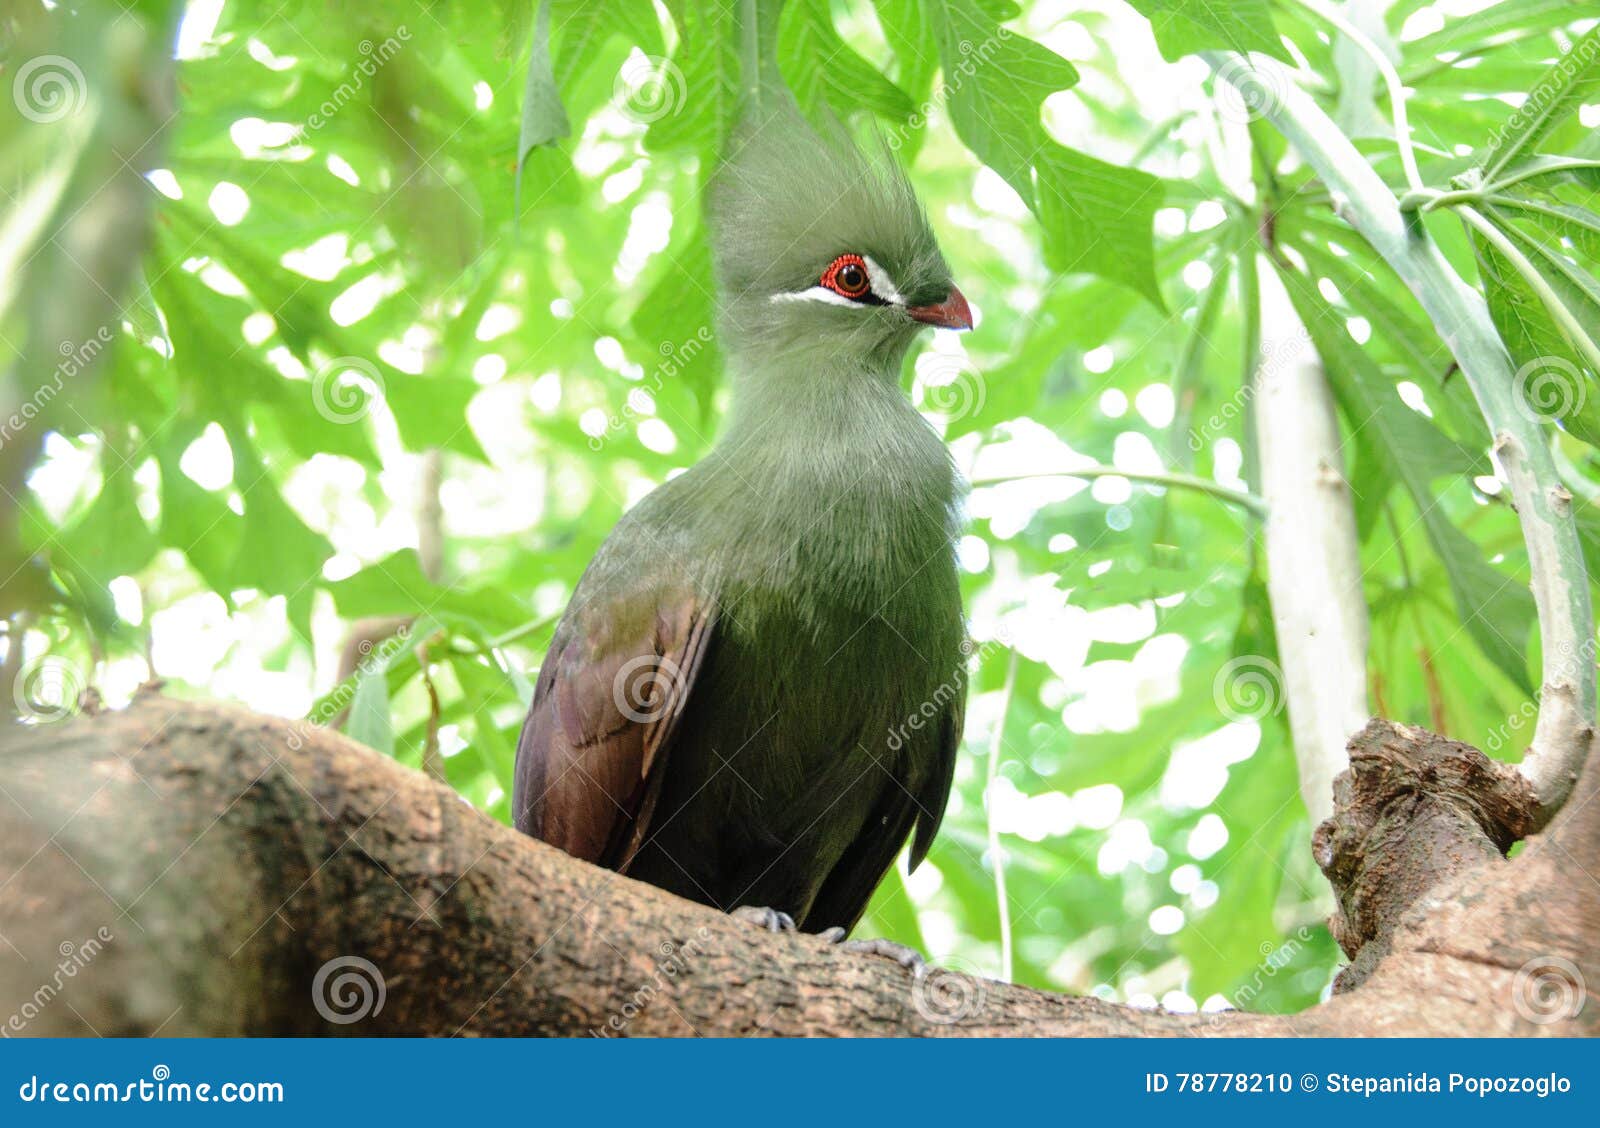 closeup bird photo of a green tauraco persa.